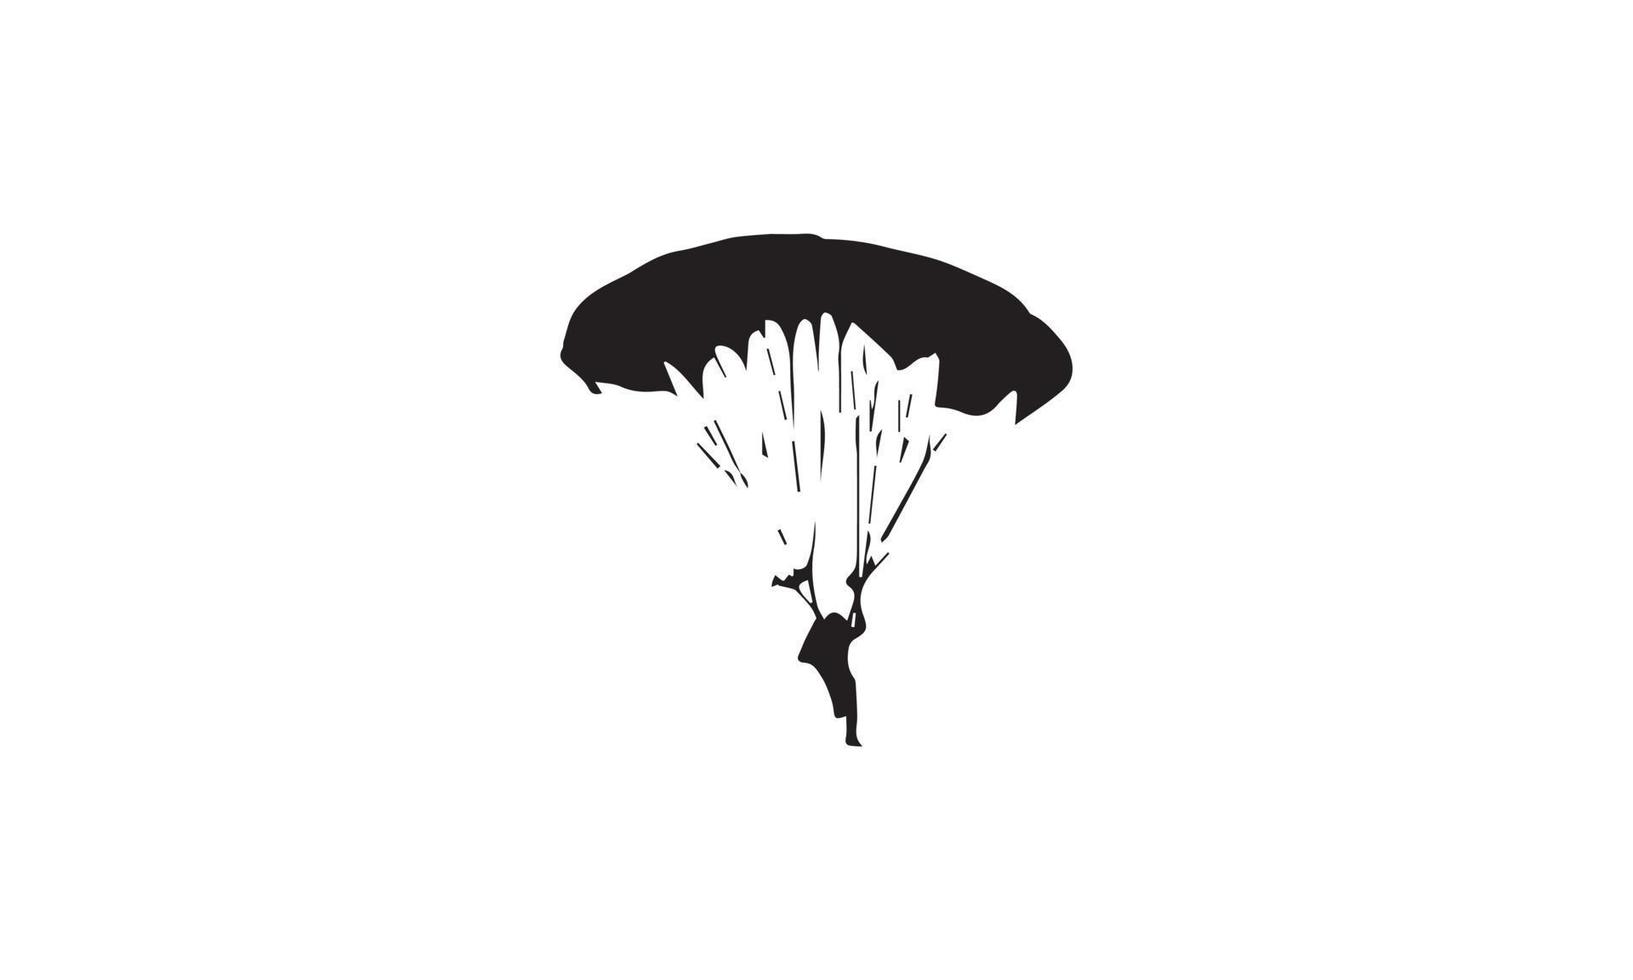 skydiving vector illustration design black and white